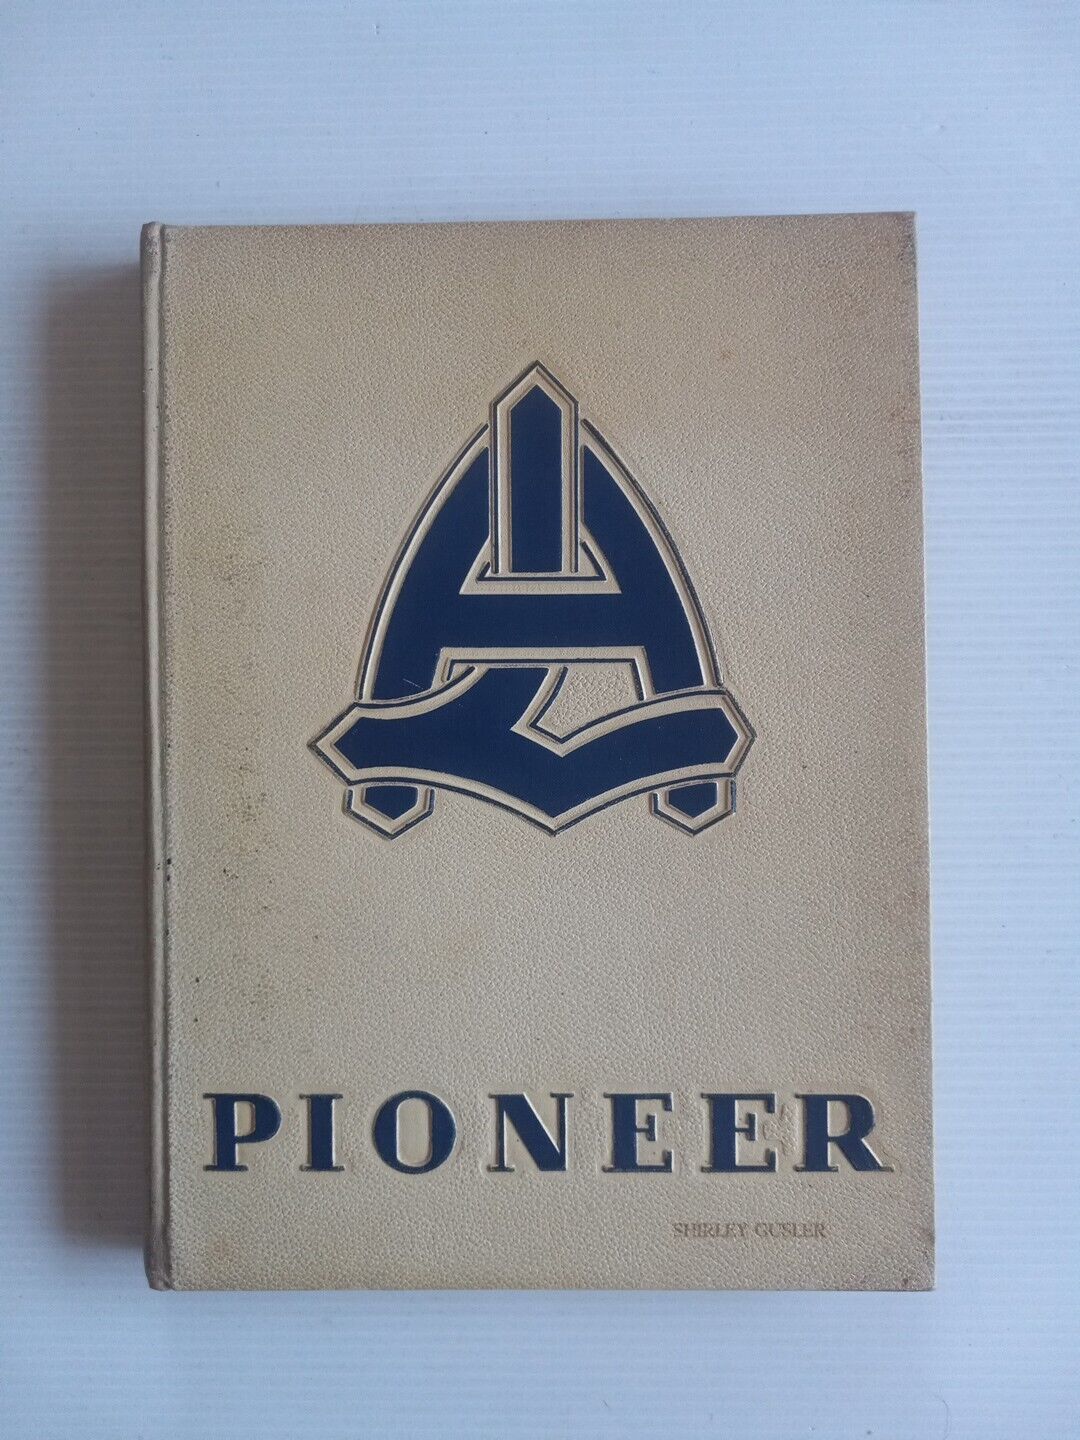 Salem VA Andrew Lewis High School yearbook 1956 Virginia The Pioneer